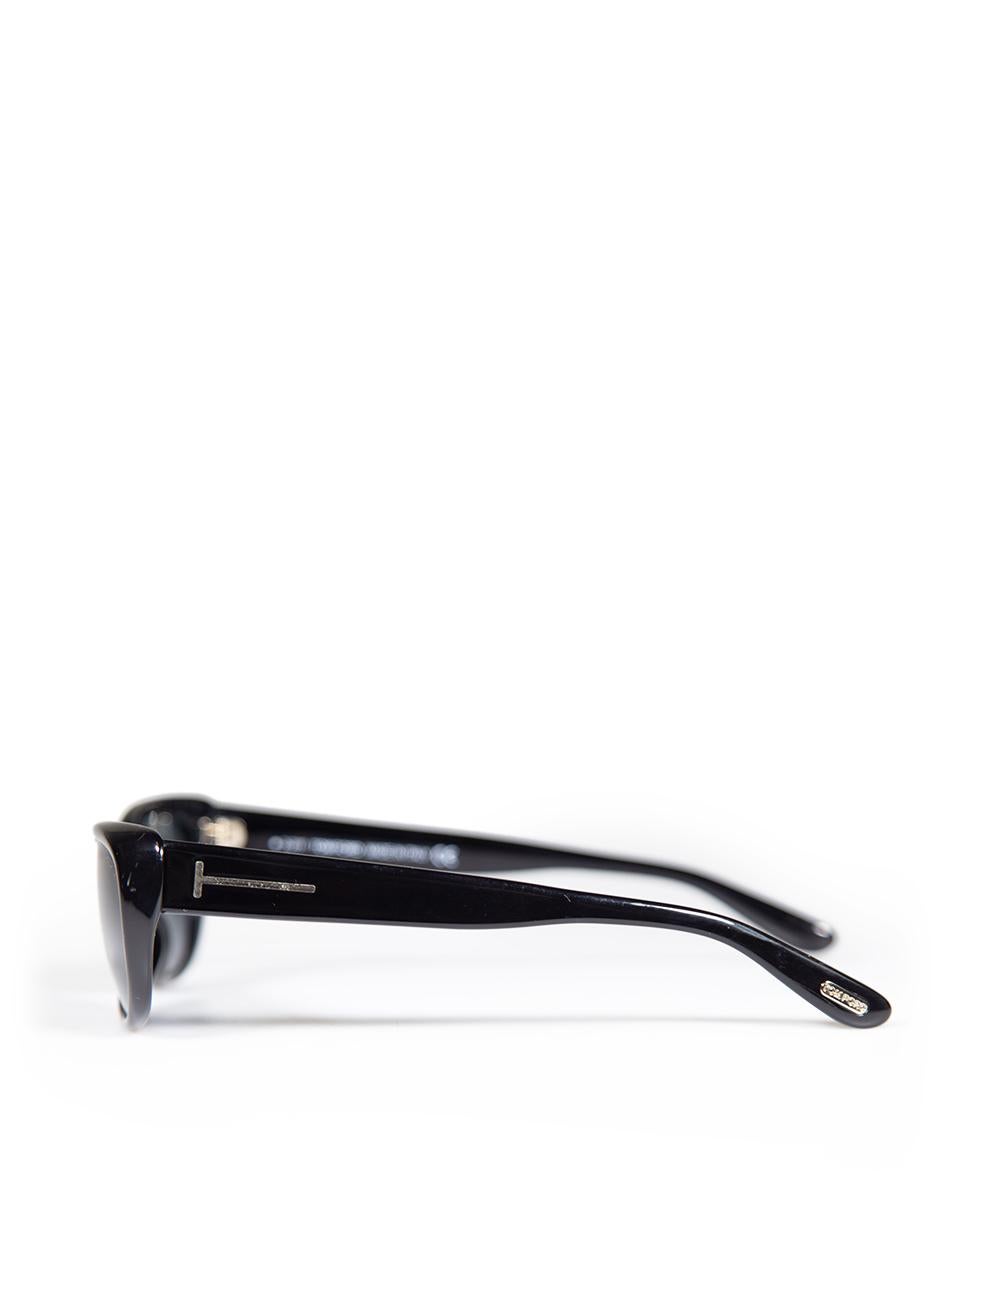 Tom Ford Shiny Black Sebastian Sunglasses For Sale 1